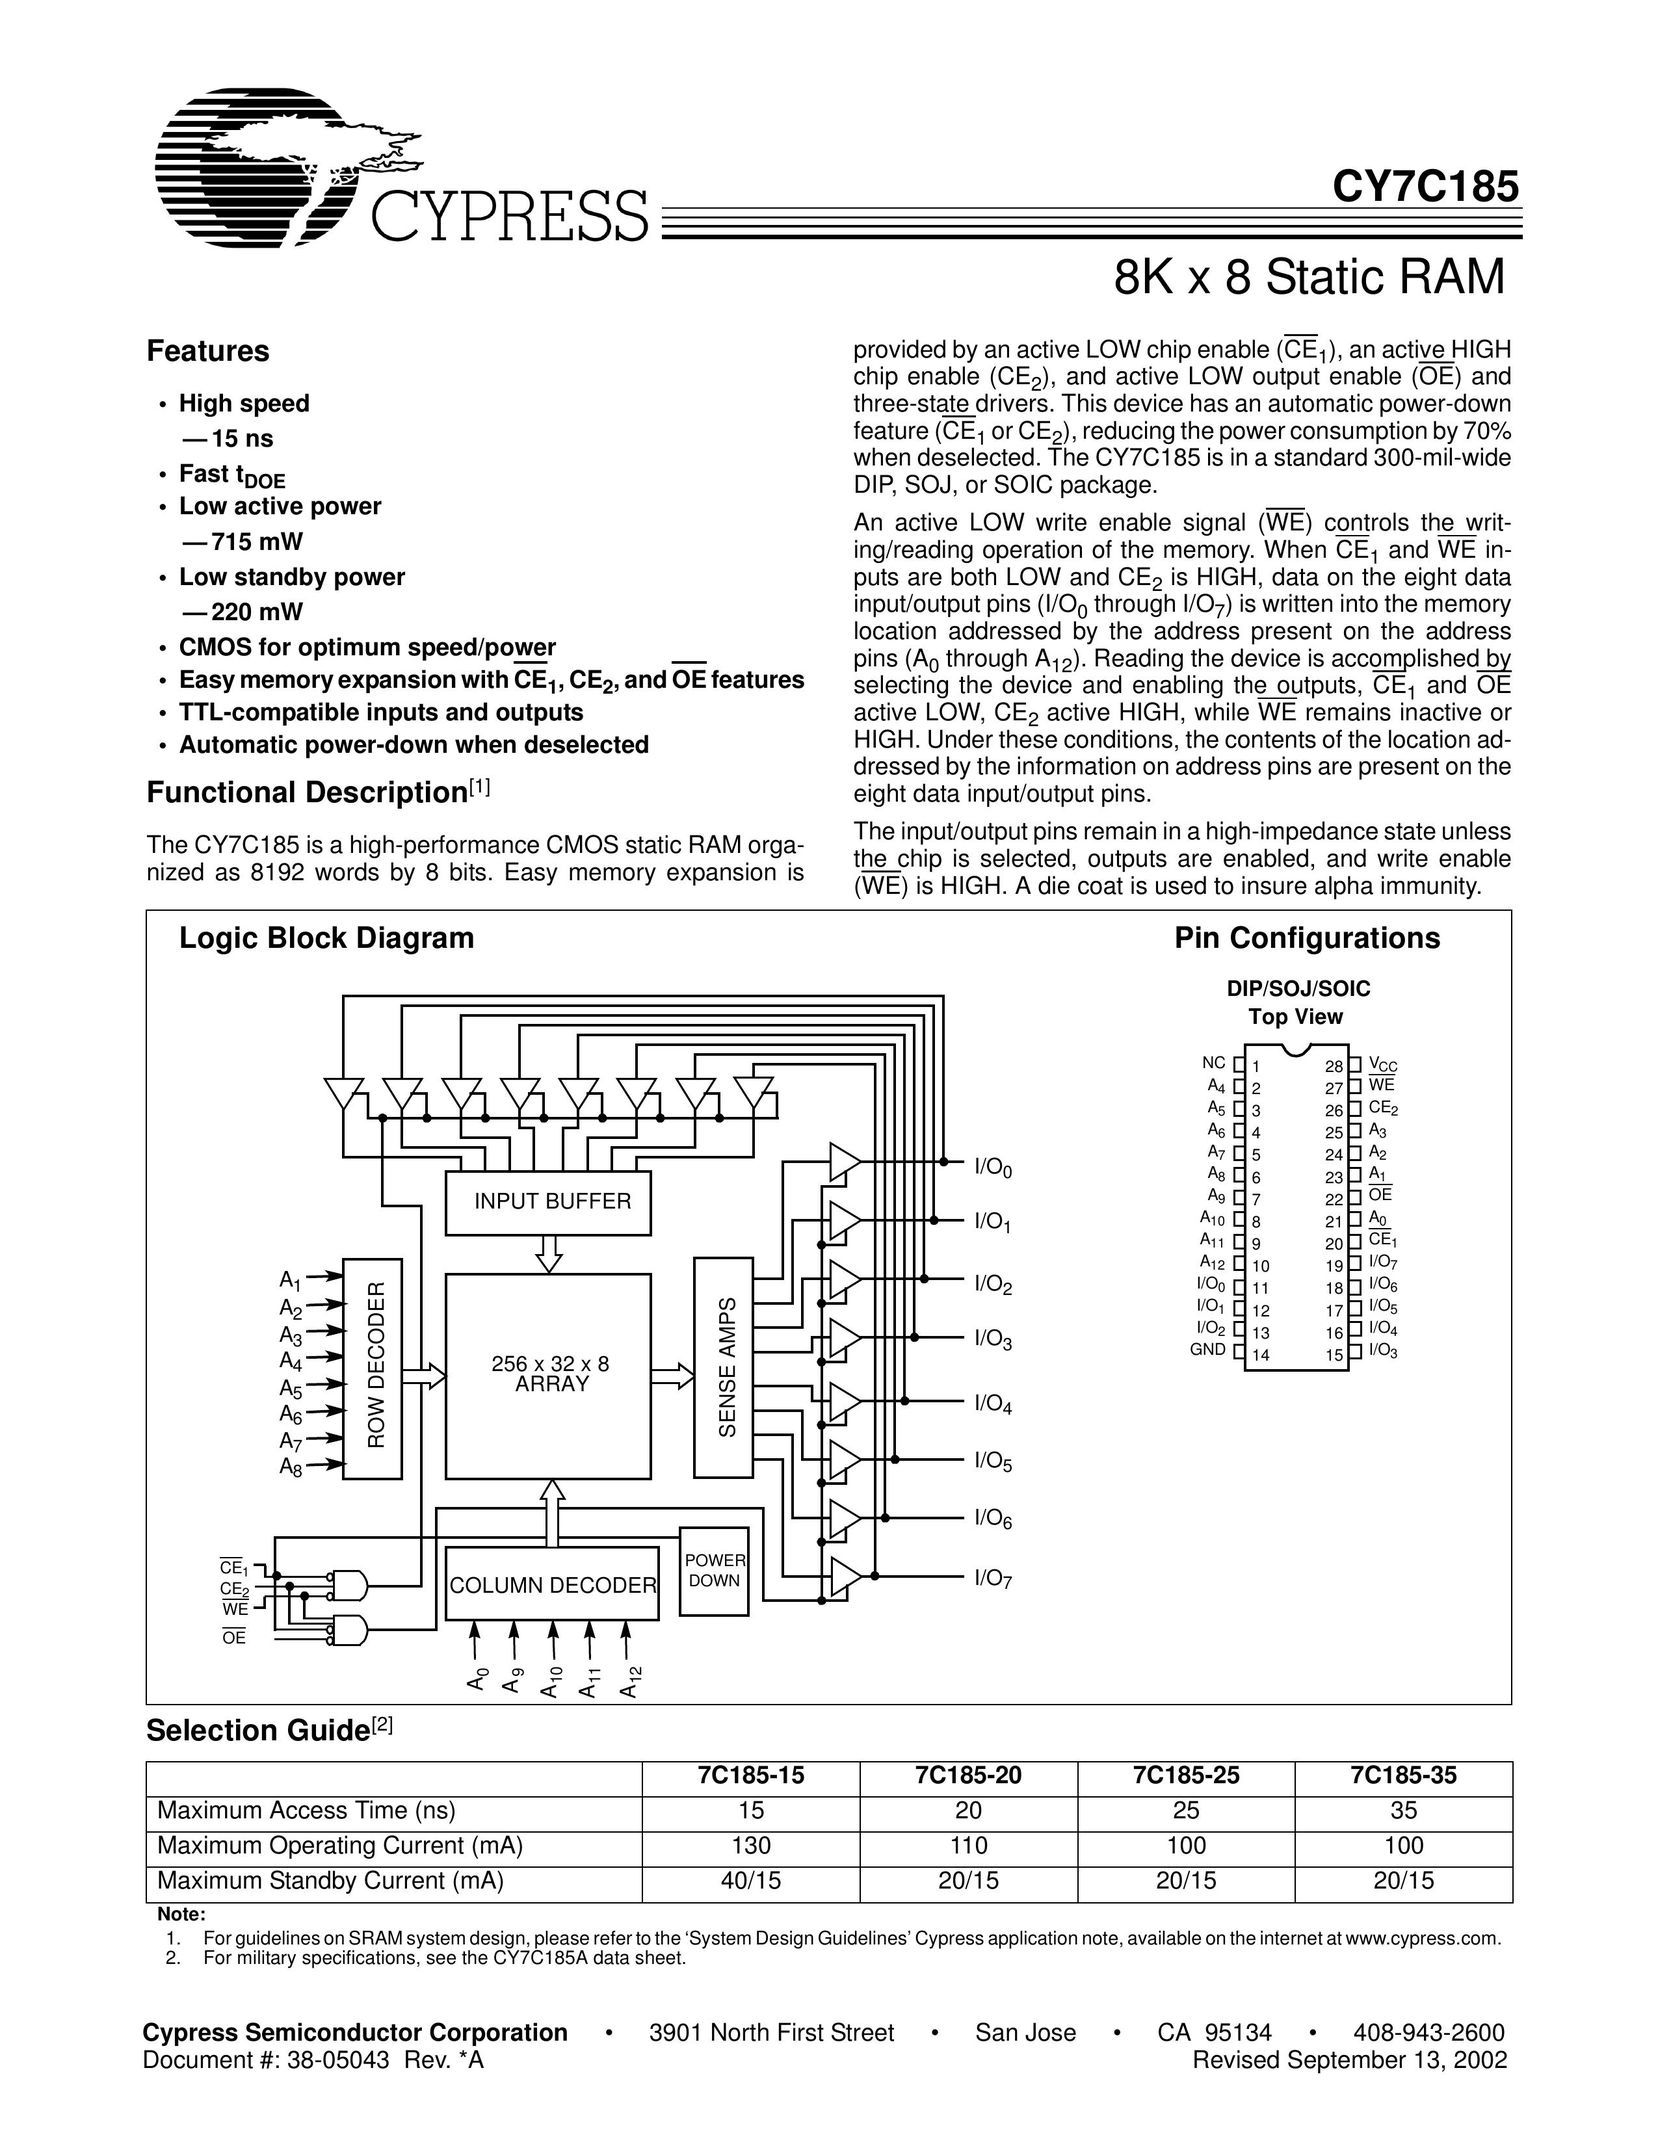 Cypress 7C185-25 Computer Hardware User Manual